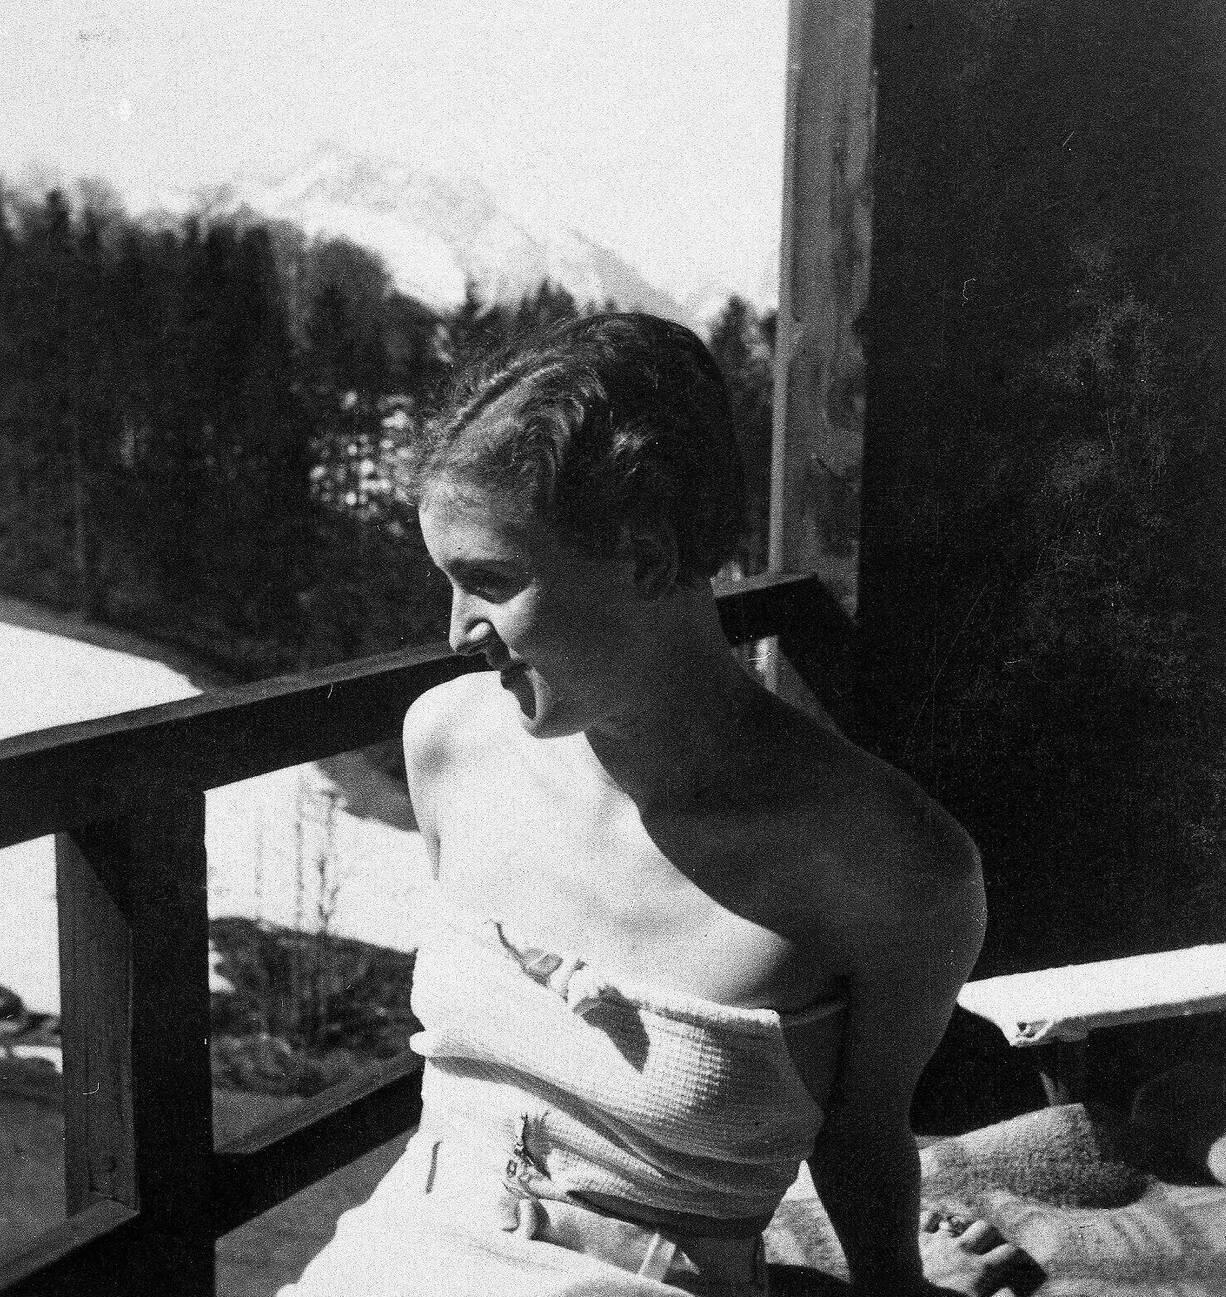 Eva Braun's final days were carefree